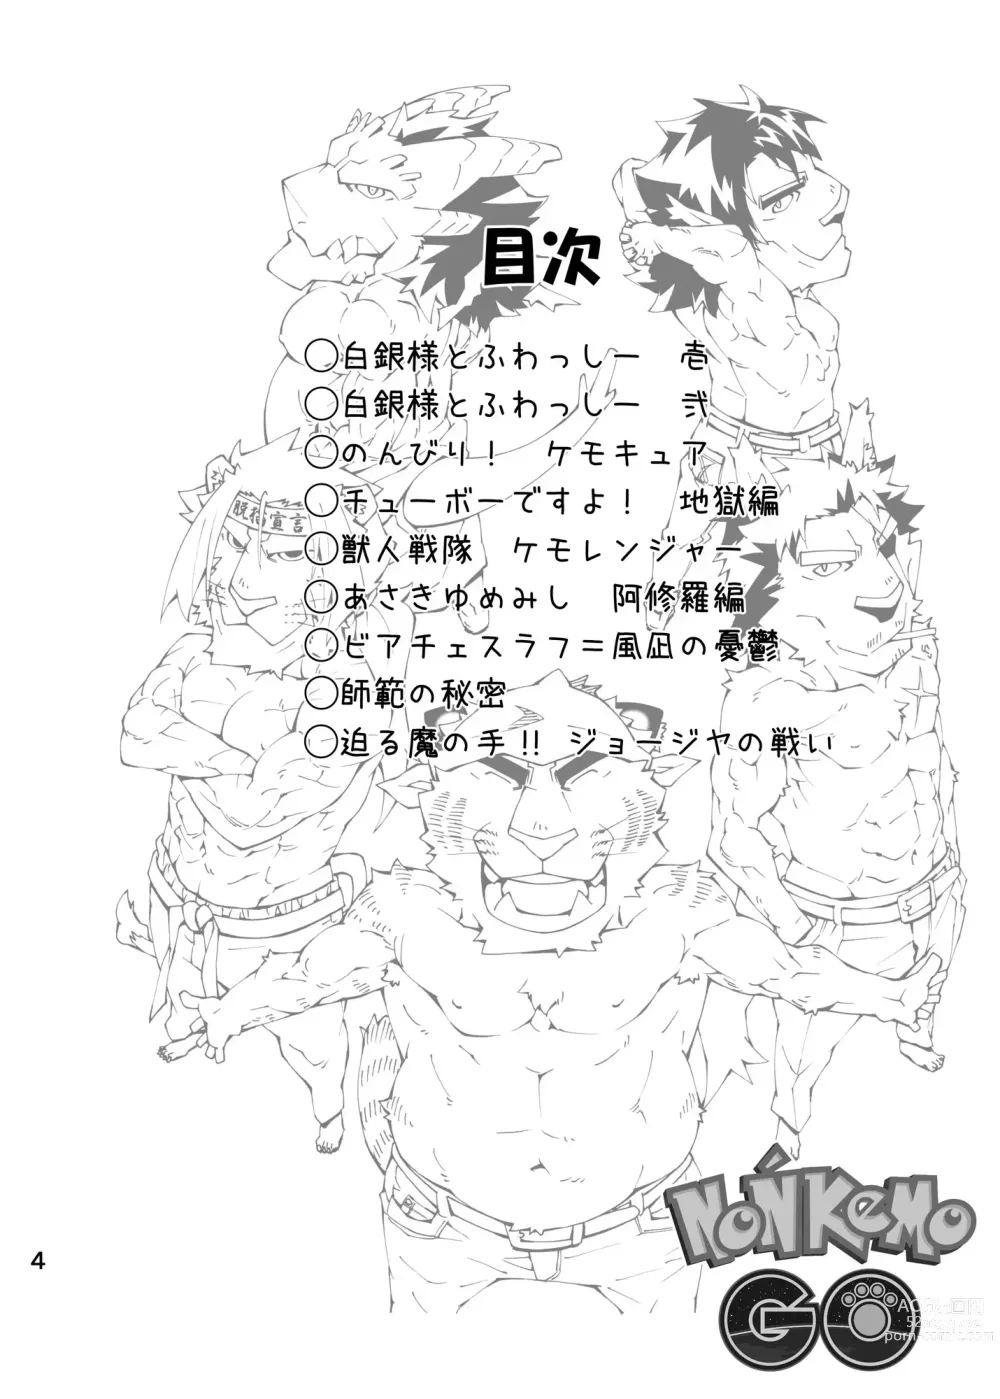 Page 3 of doujinshi NONKEMO GO